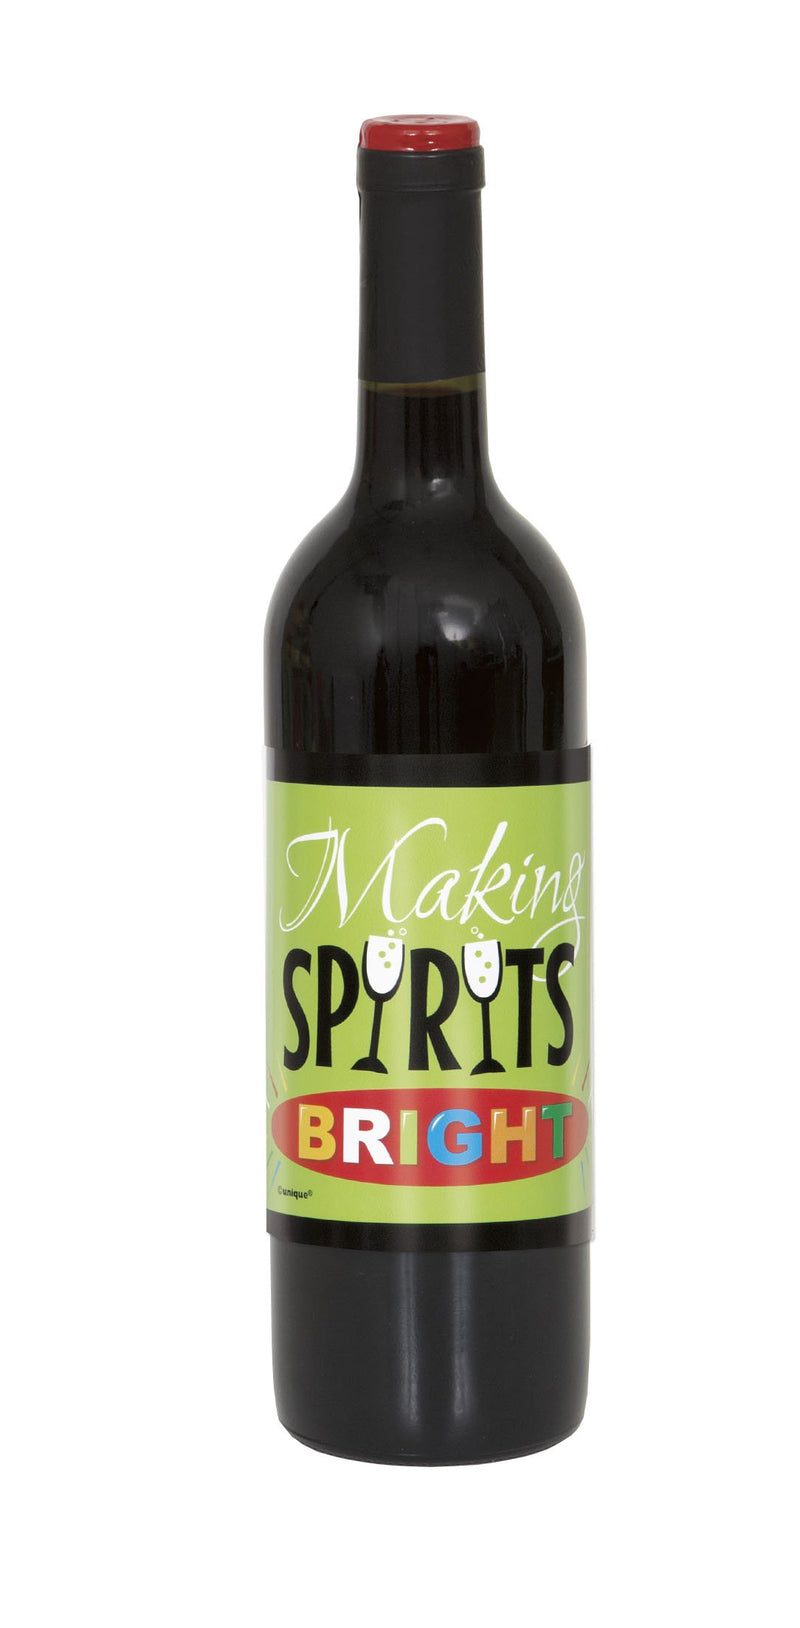 Christmas Spirits Wine Bottle Labels, 4ct - PawsPlanet Australia